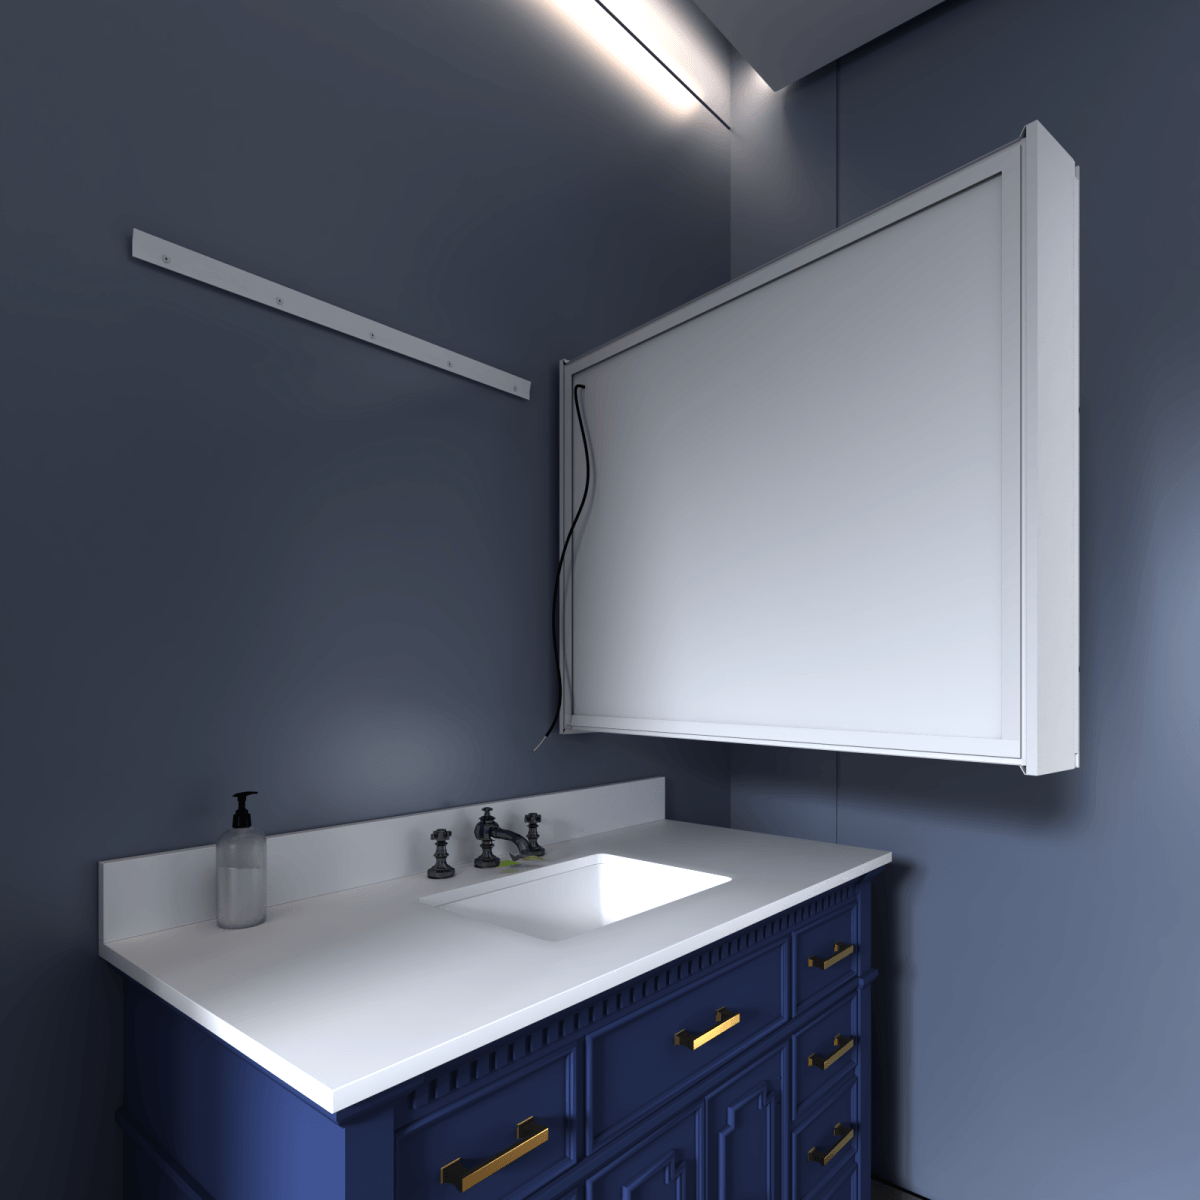 Boost-M1 24" W x 30" H Light Medicine Cabinet Recessed or Surface Mount Aluminum Adjustable Shelves Vanity Mirror Cabinet